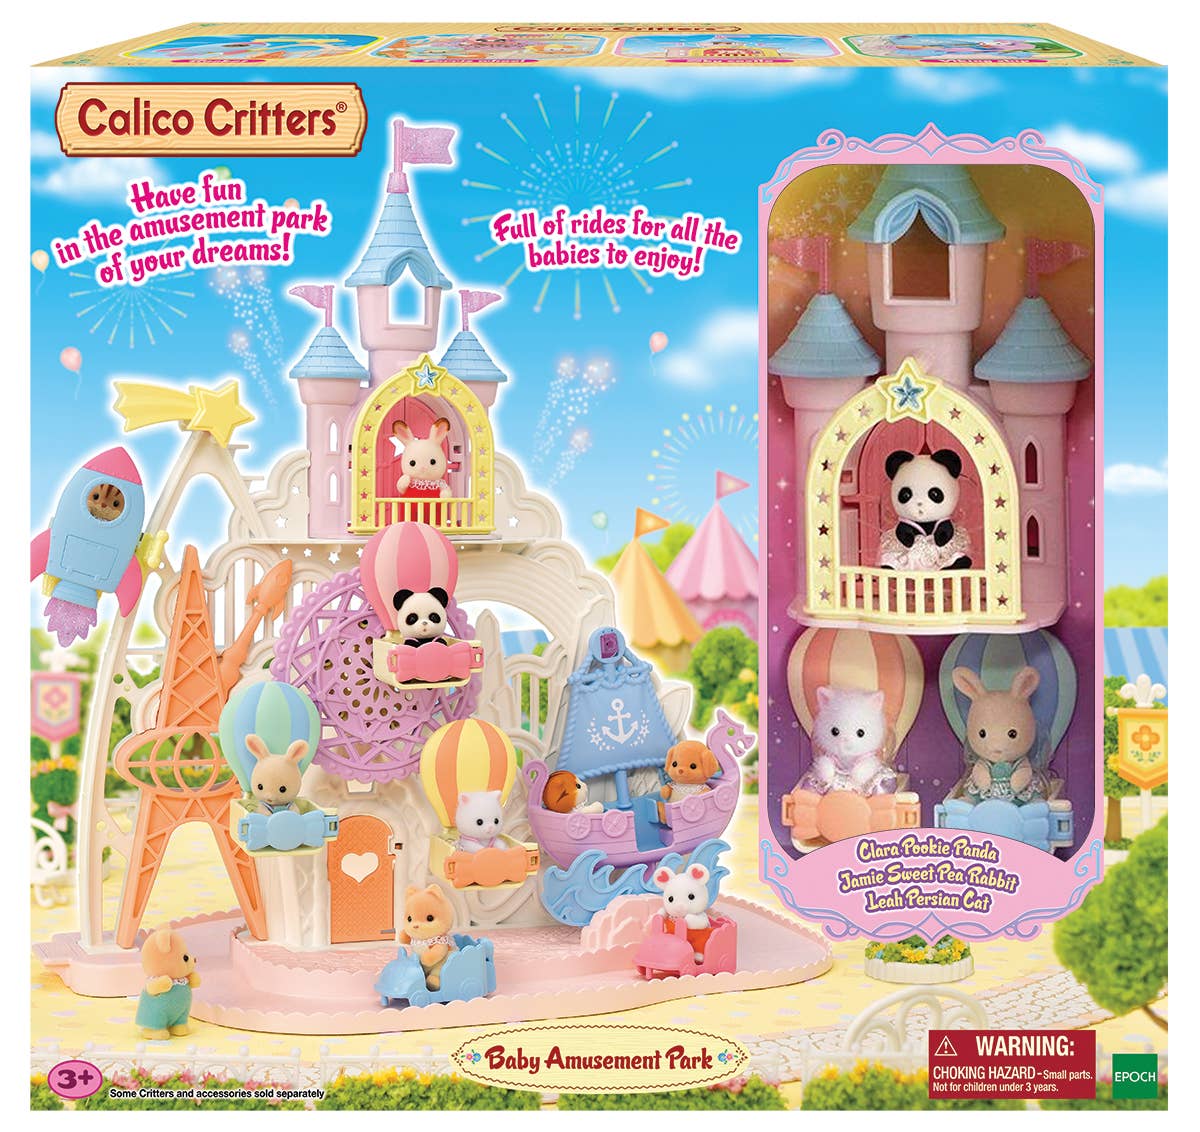 Dollhouse Playset, Baby Amusement Park, Collectible Toys